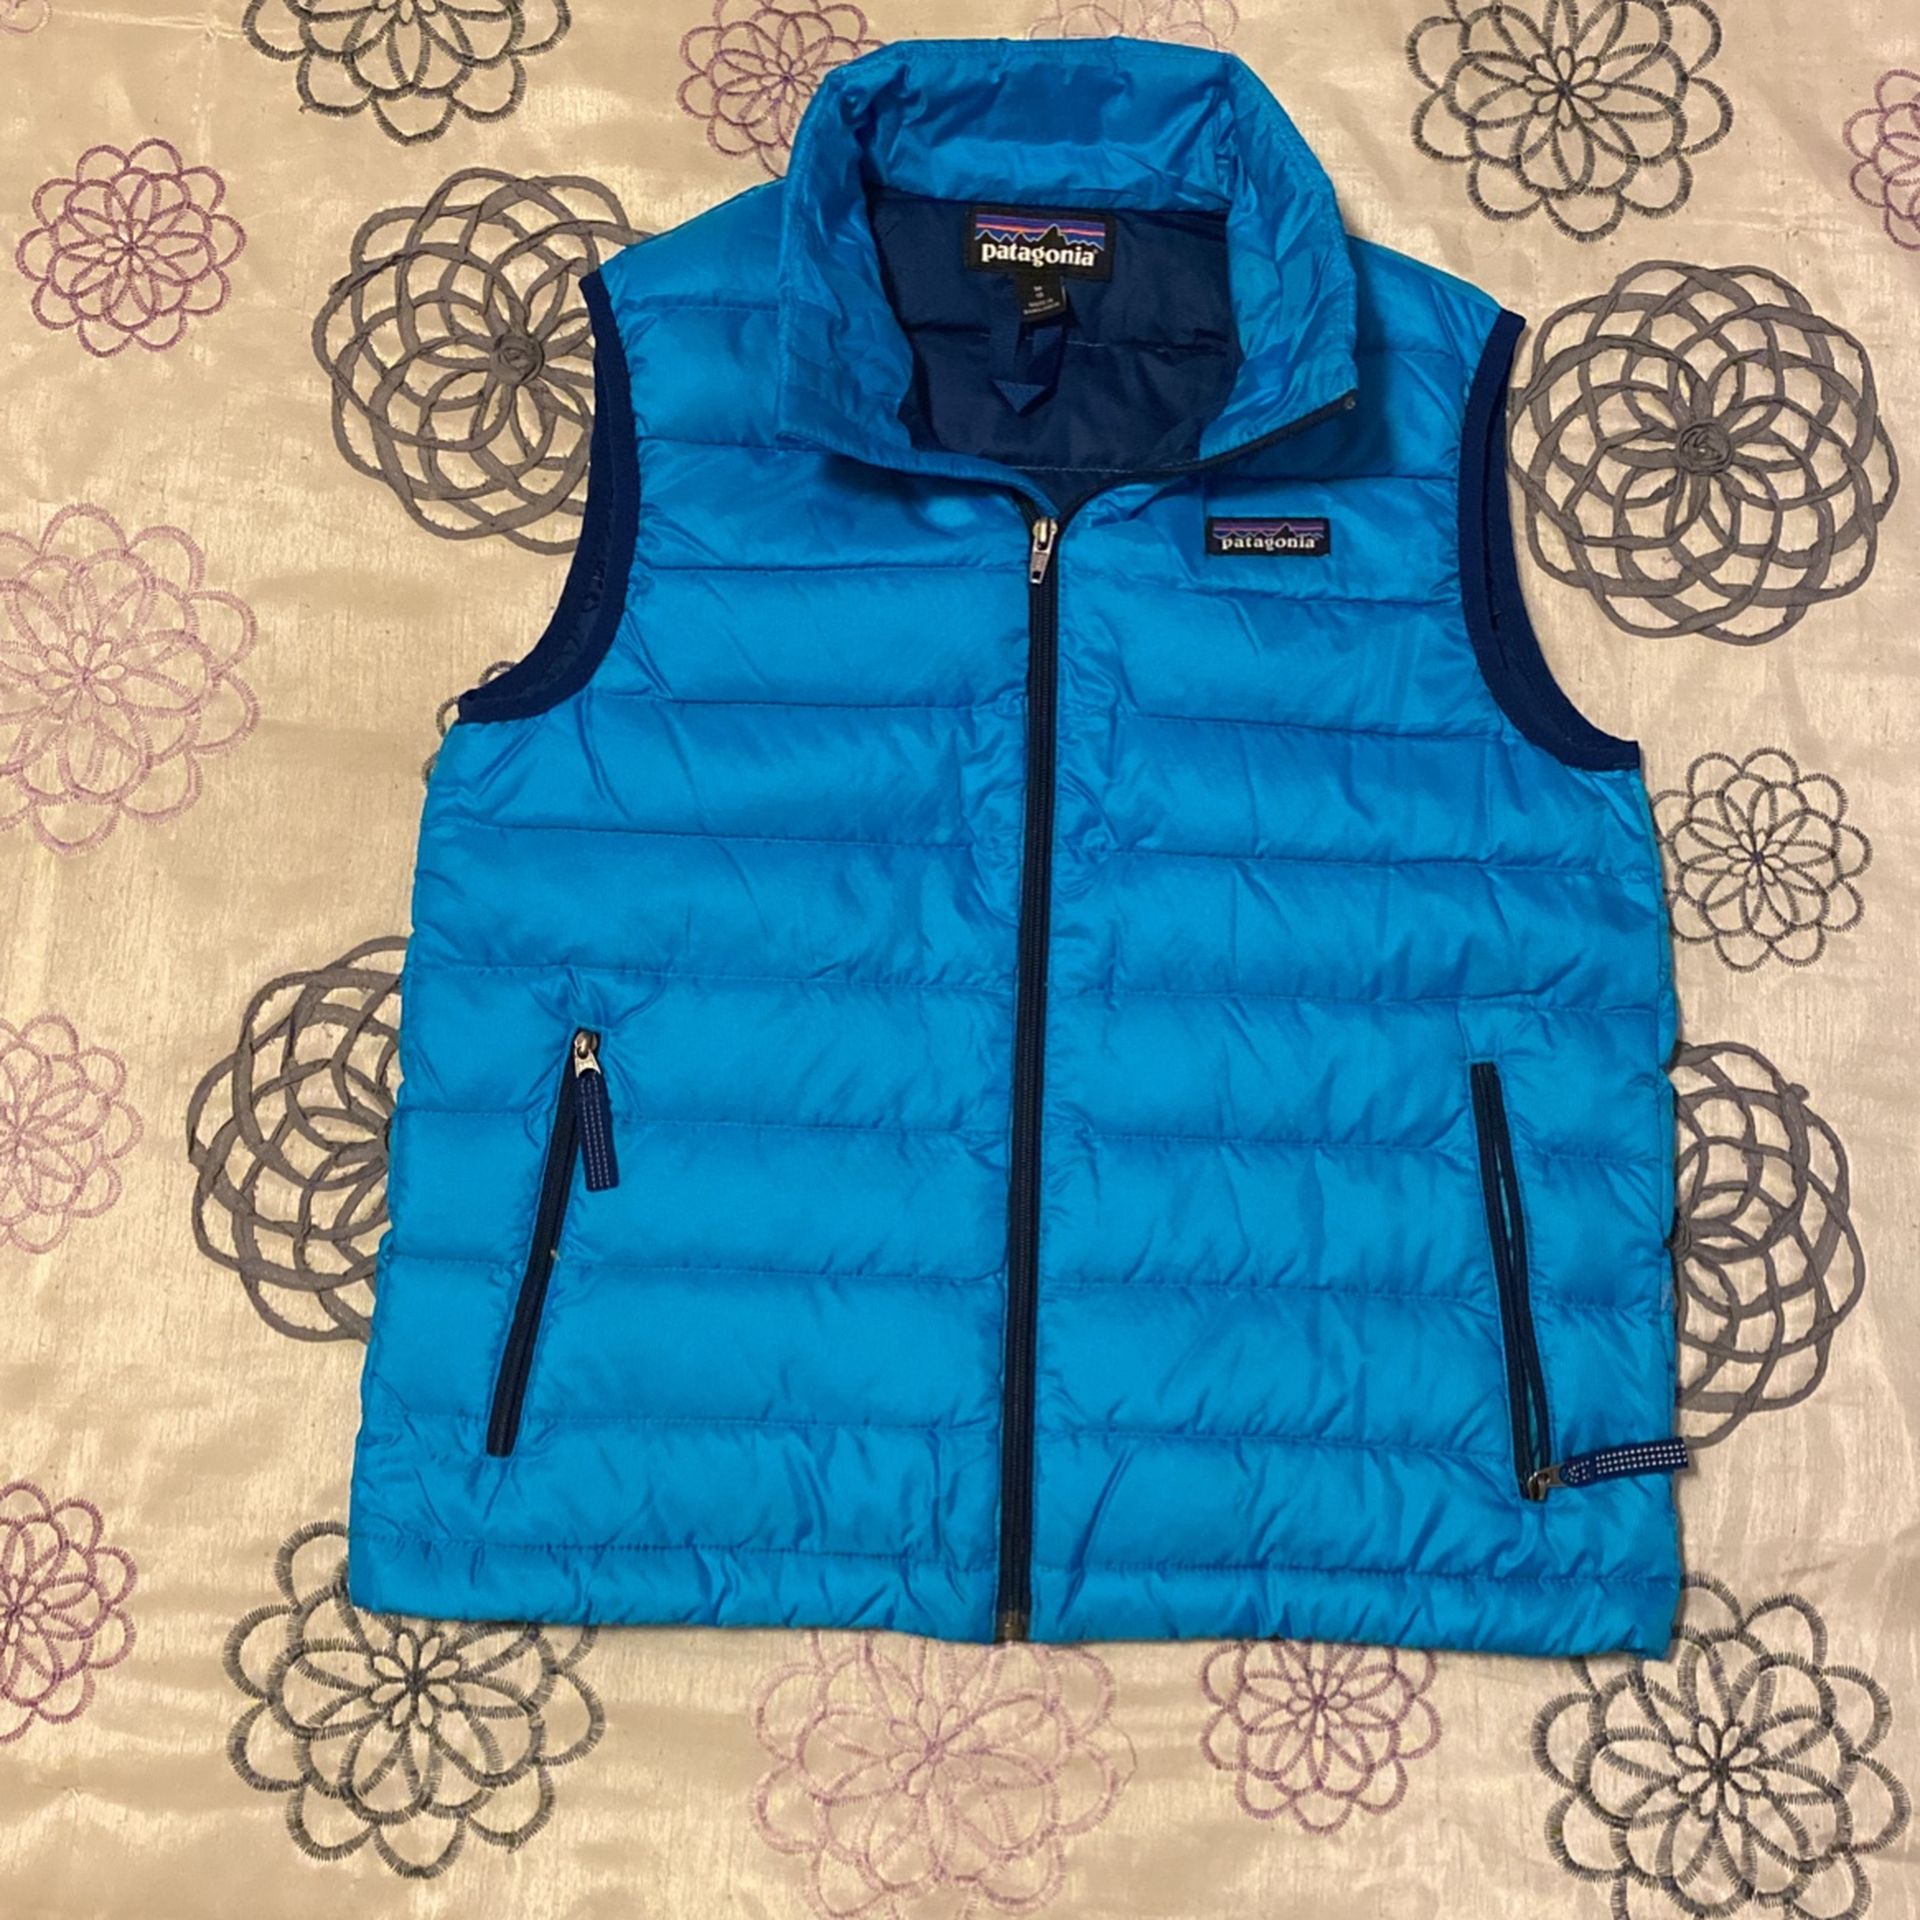 Blue Patagonia Jacket Size M (10) For Kids